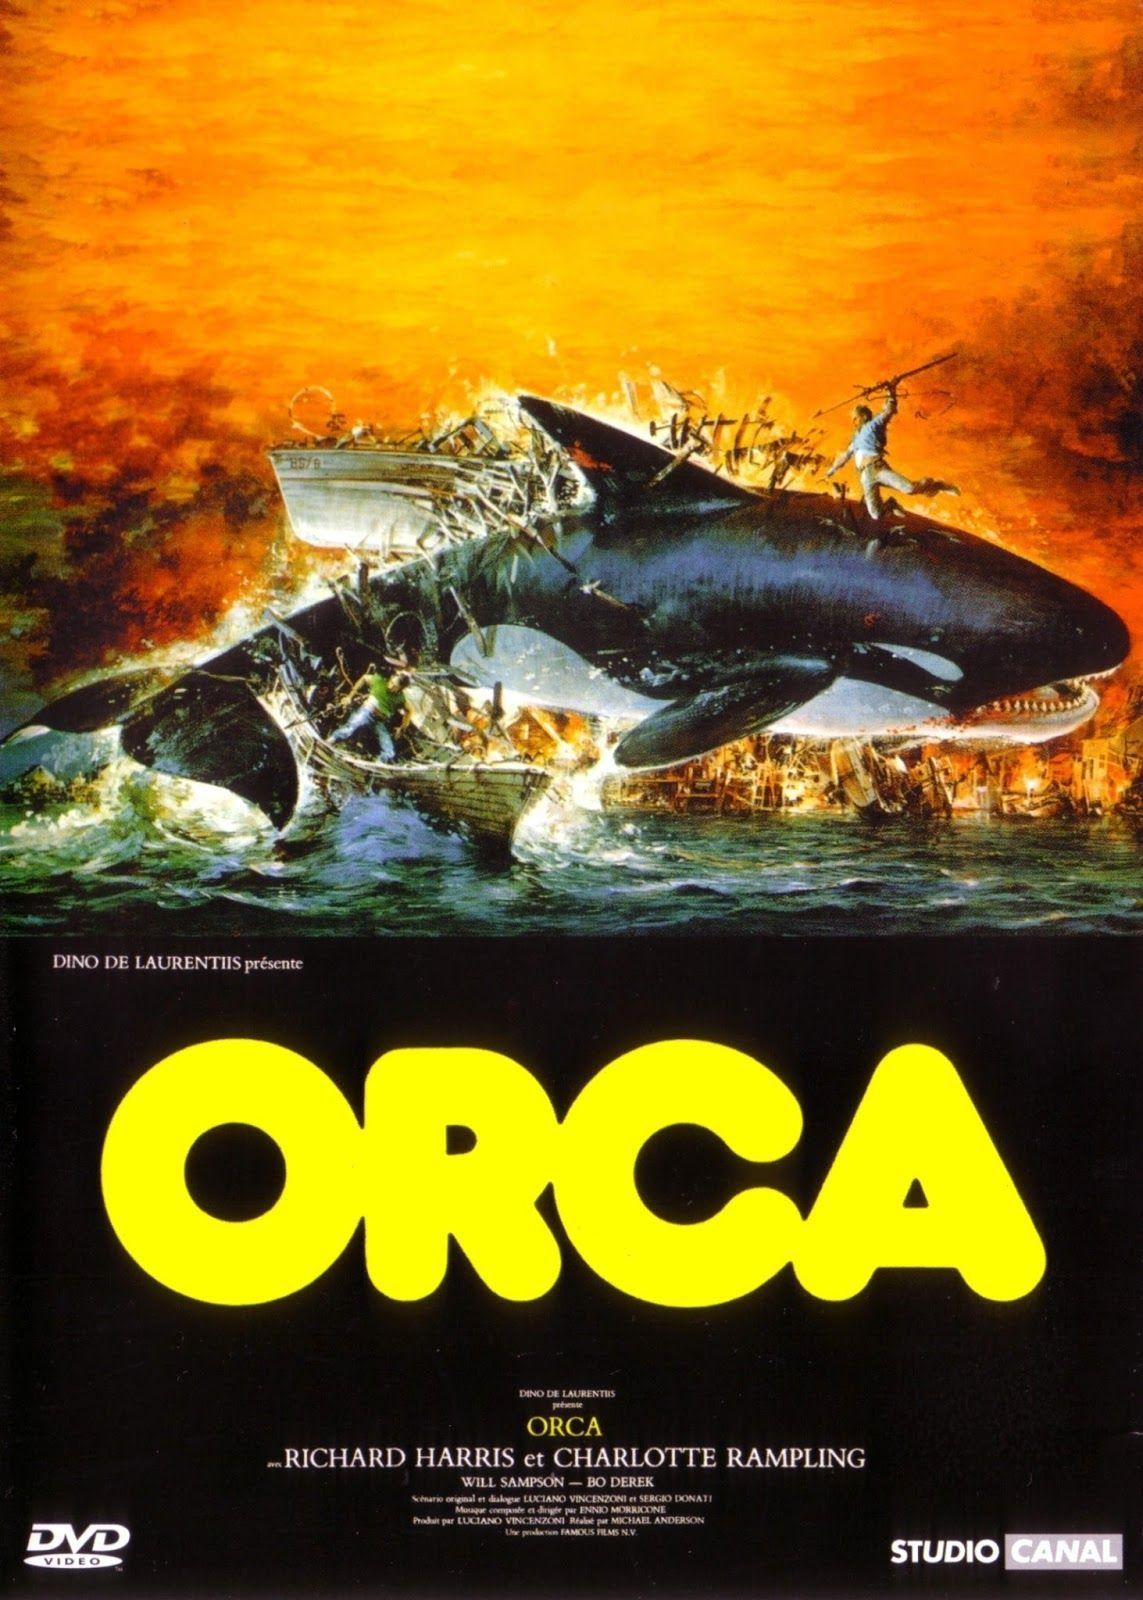 Orca Movie Logo - Orca, The Killer Whale (1977) D: Michael Anderson. 01 03 02. Movie